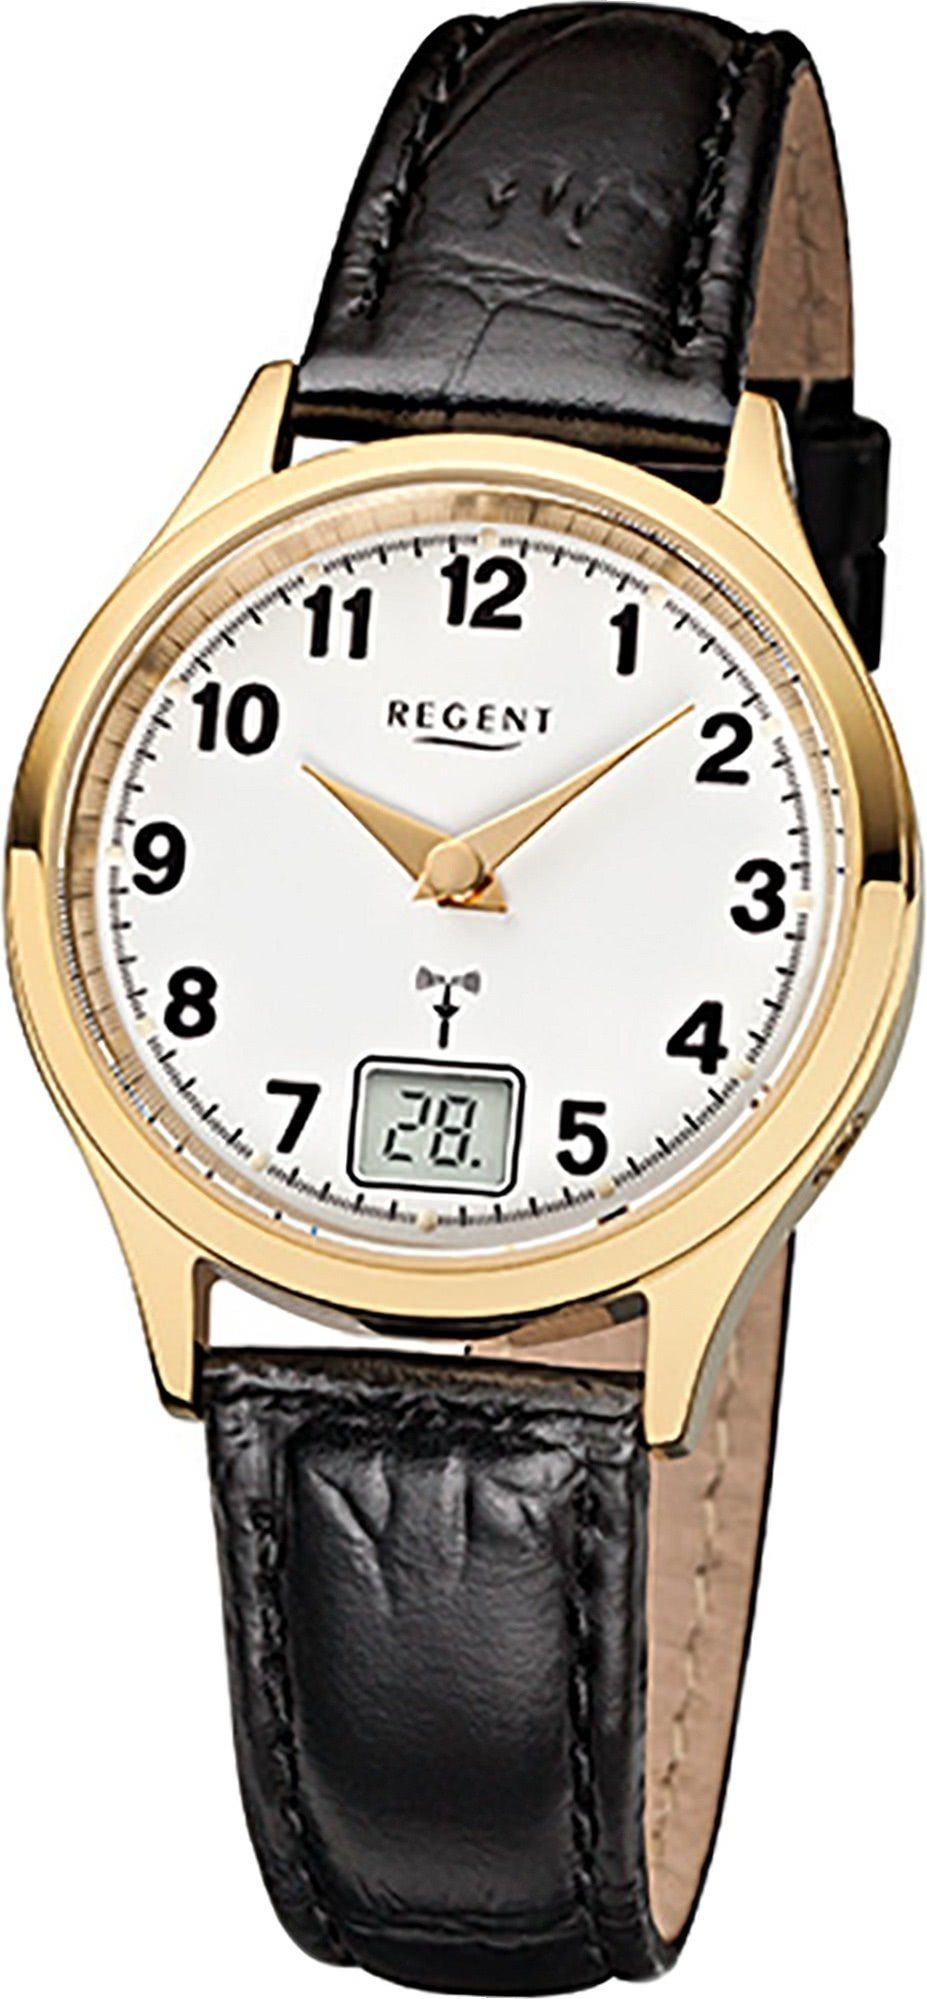 Regent Funkuhr Regent Leder Damen Uhr FR-194 Funkuhr, Damenuhr mit Lederarmband, rundes Gehäuse, (ca. 29mm), Elegant-Style